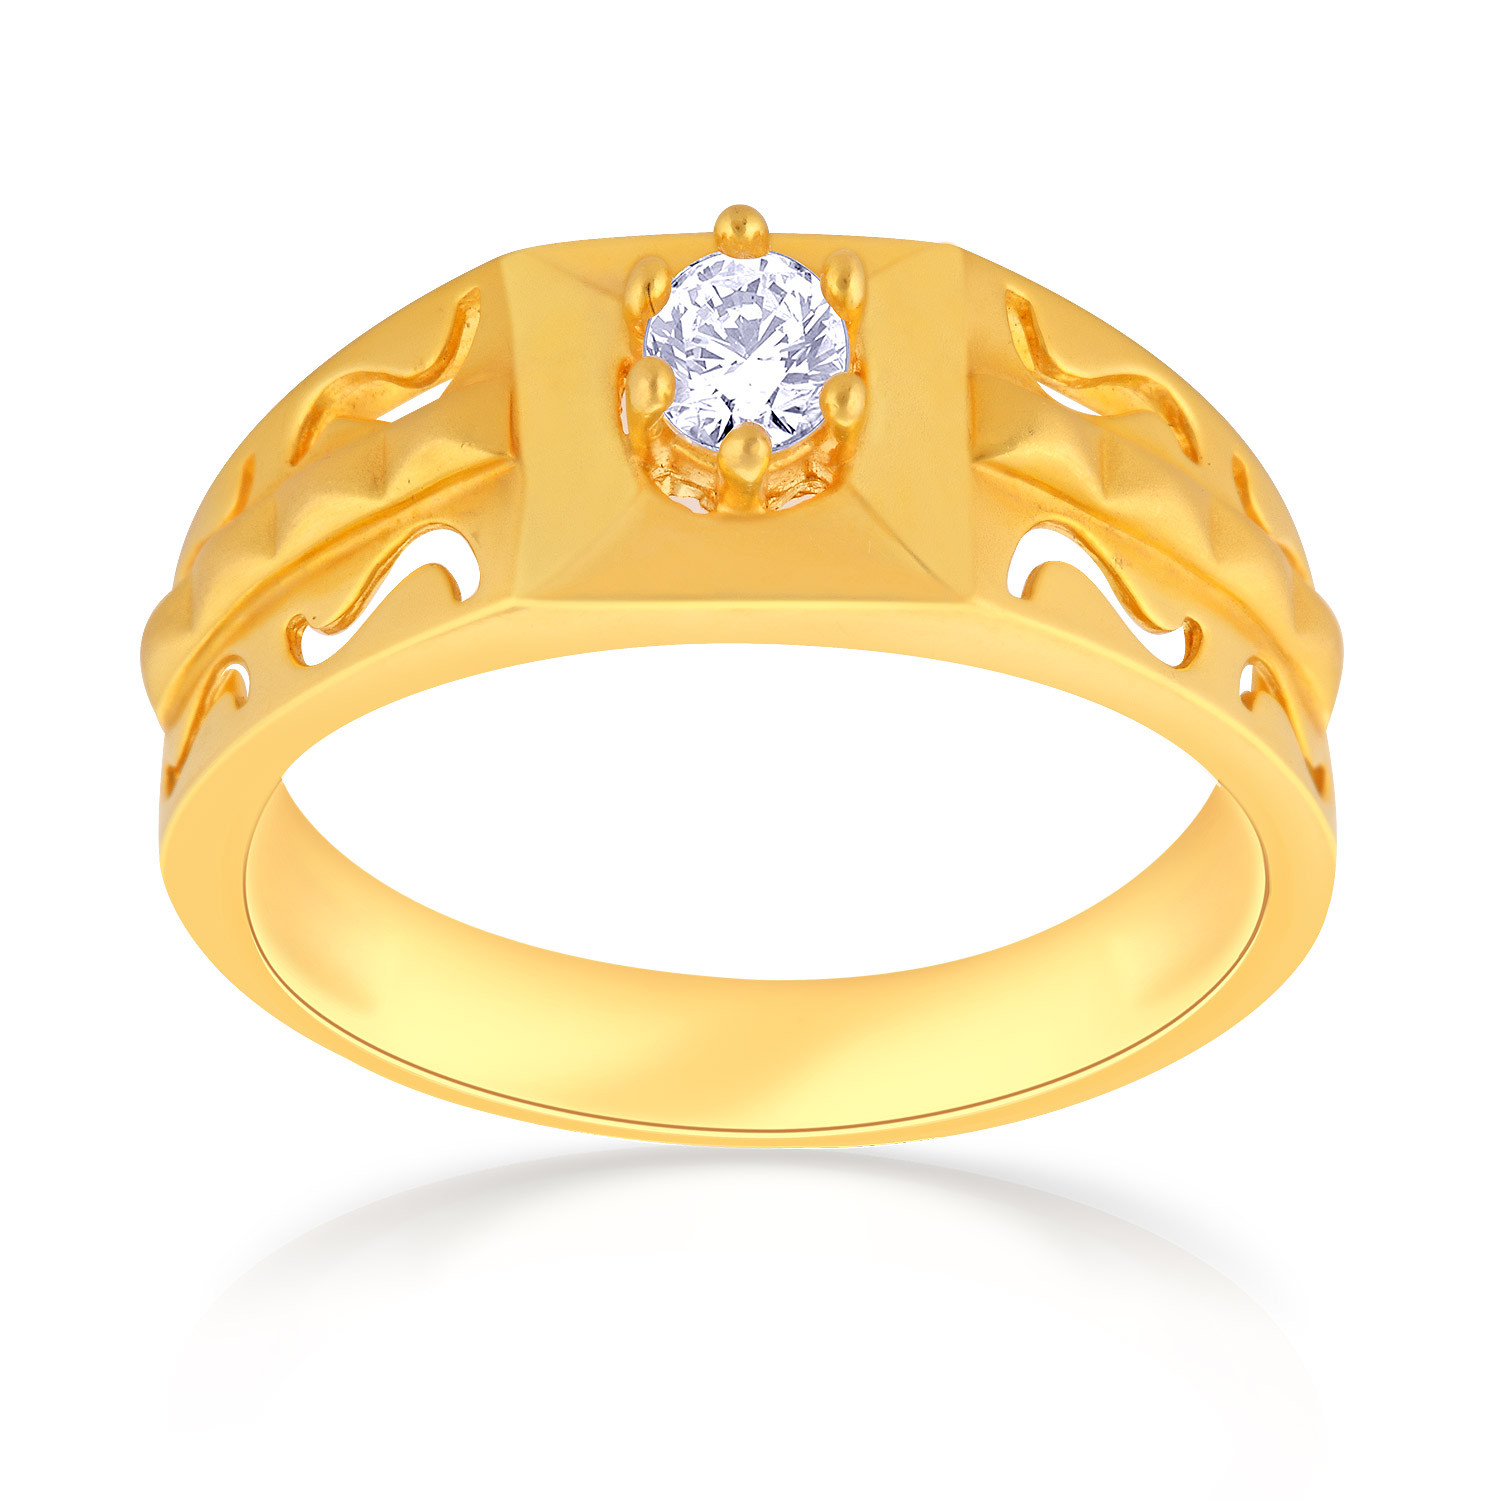 Buy Malabar Gold & Diamonds BIS Hallmark (916) 22k Yellow Gold Ring For Men  at Amazon.in